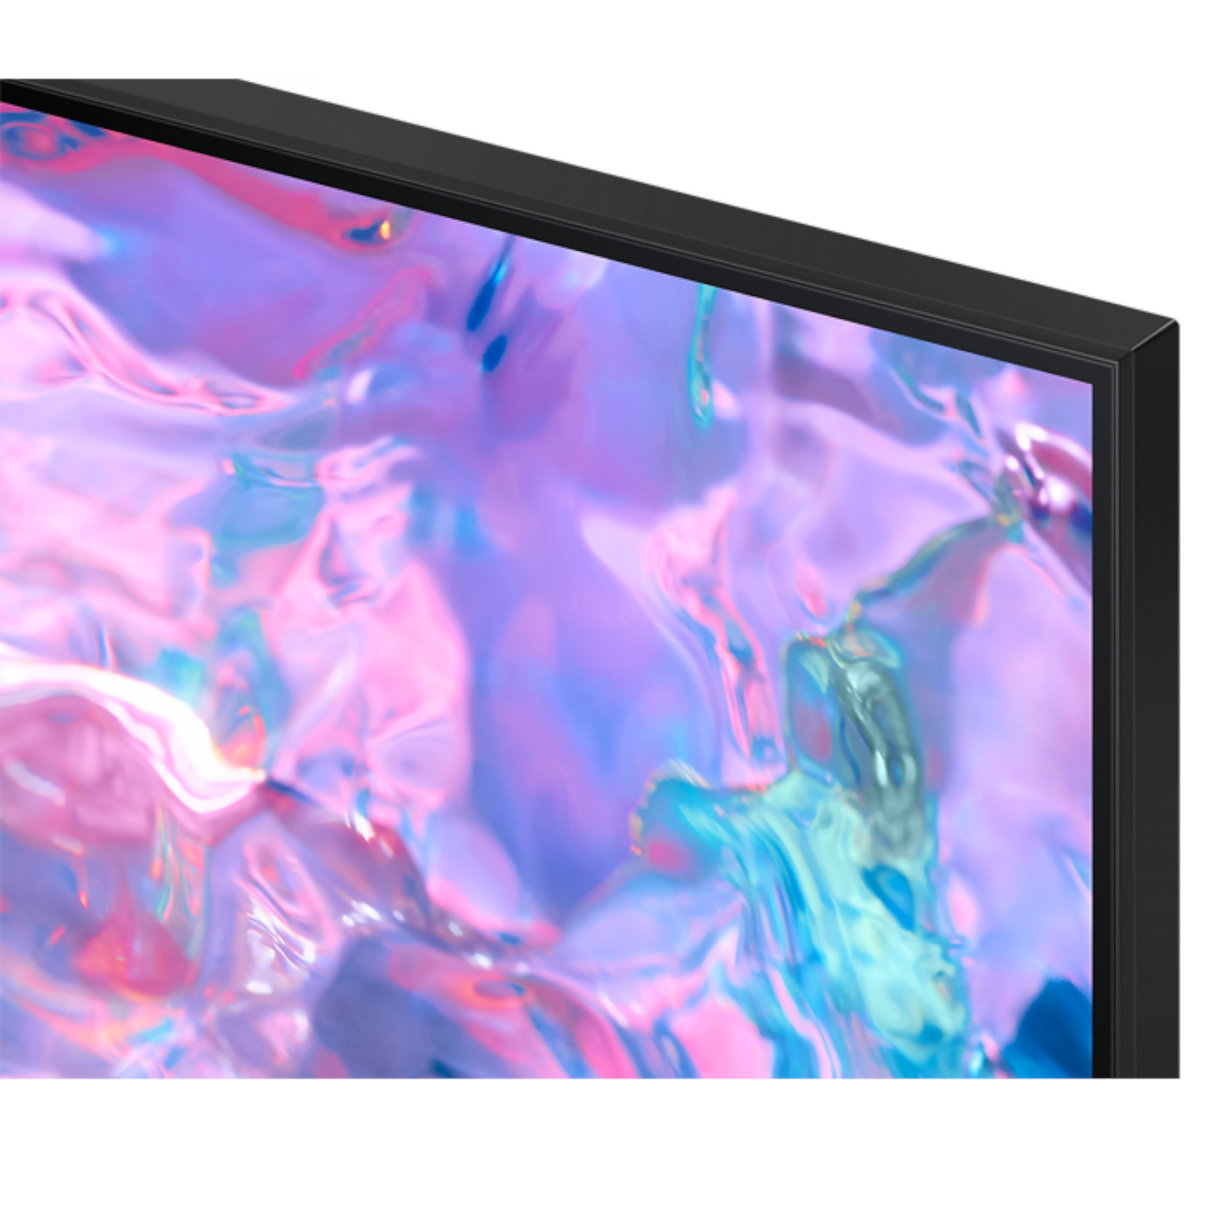 Smart TV: Explore intelligent features on the Samsung 4K UHD Smart TV.